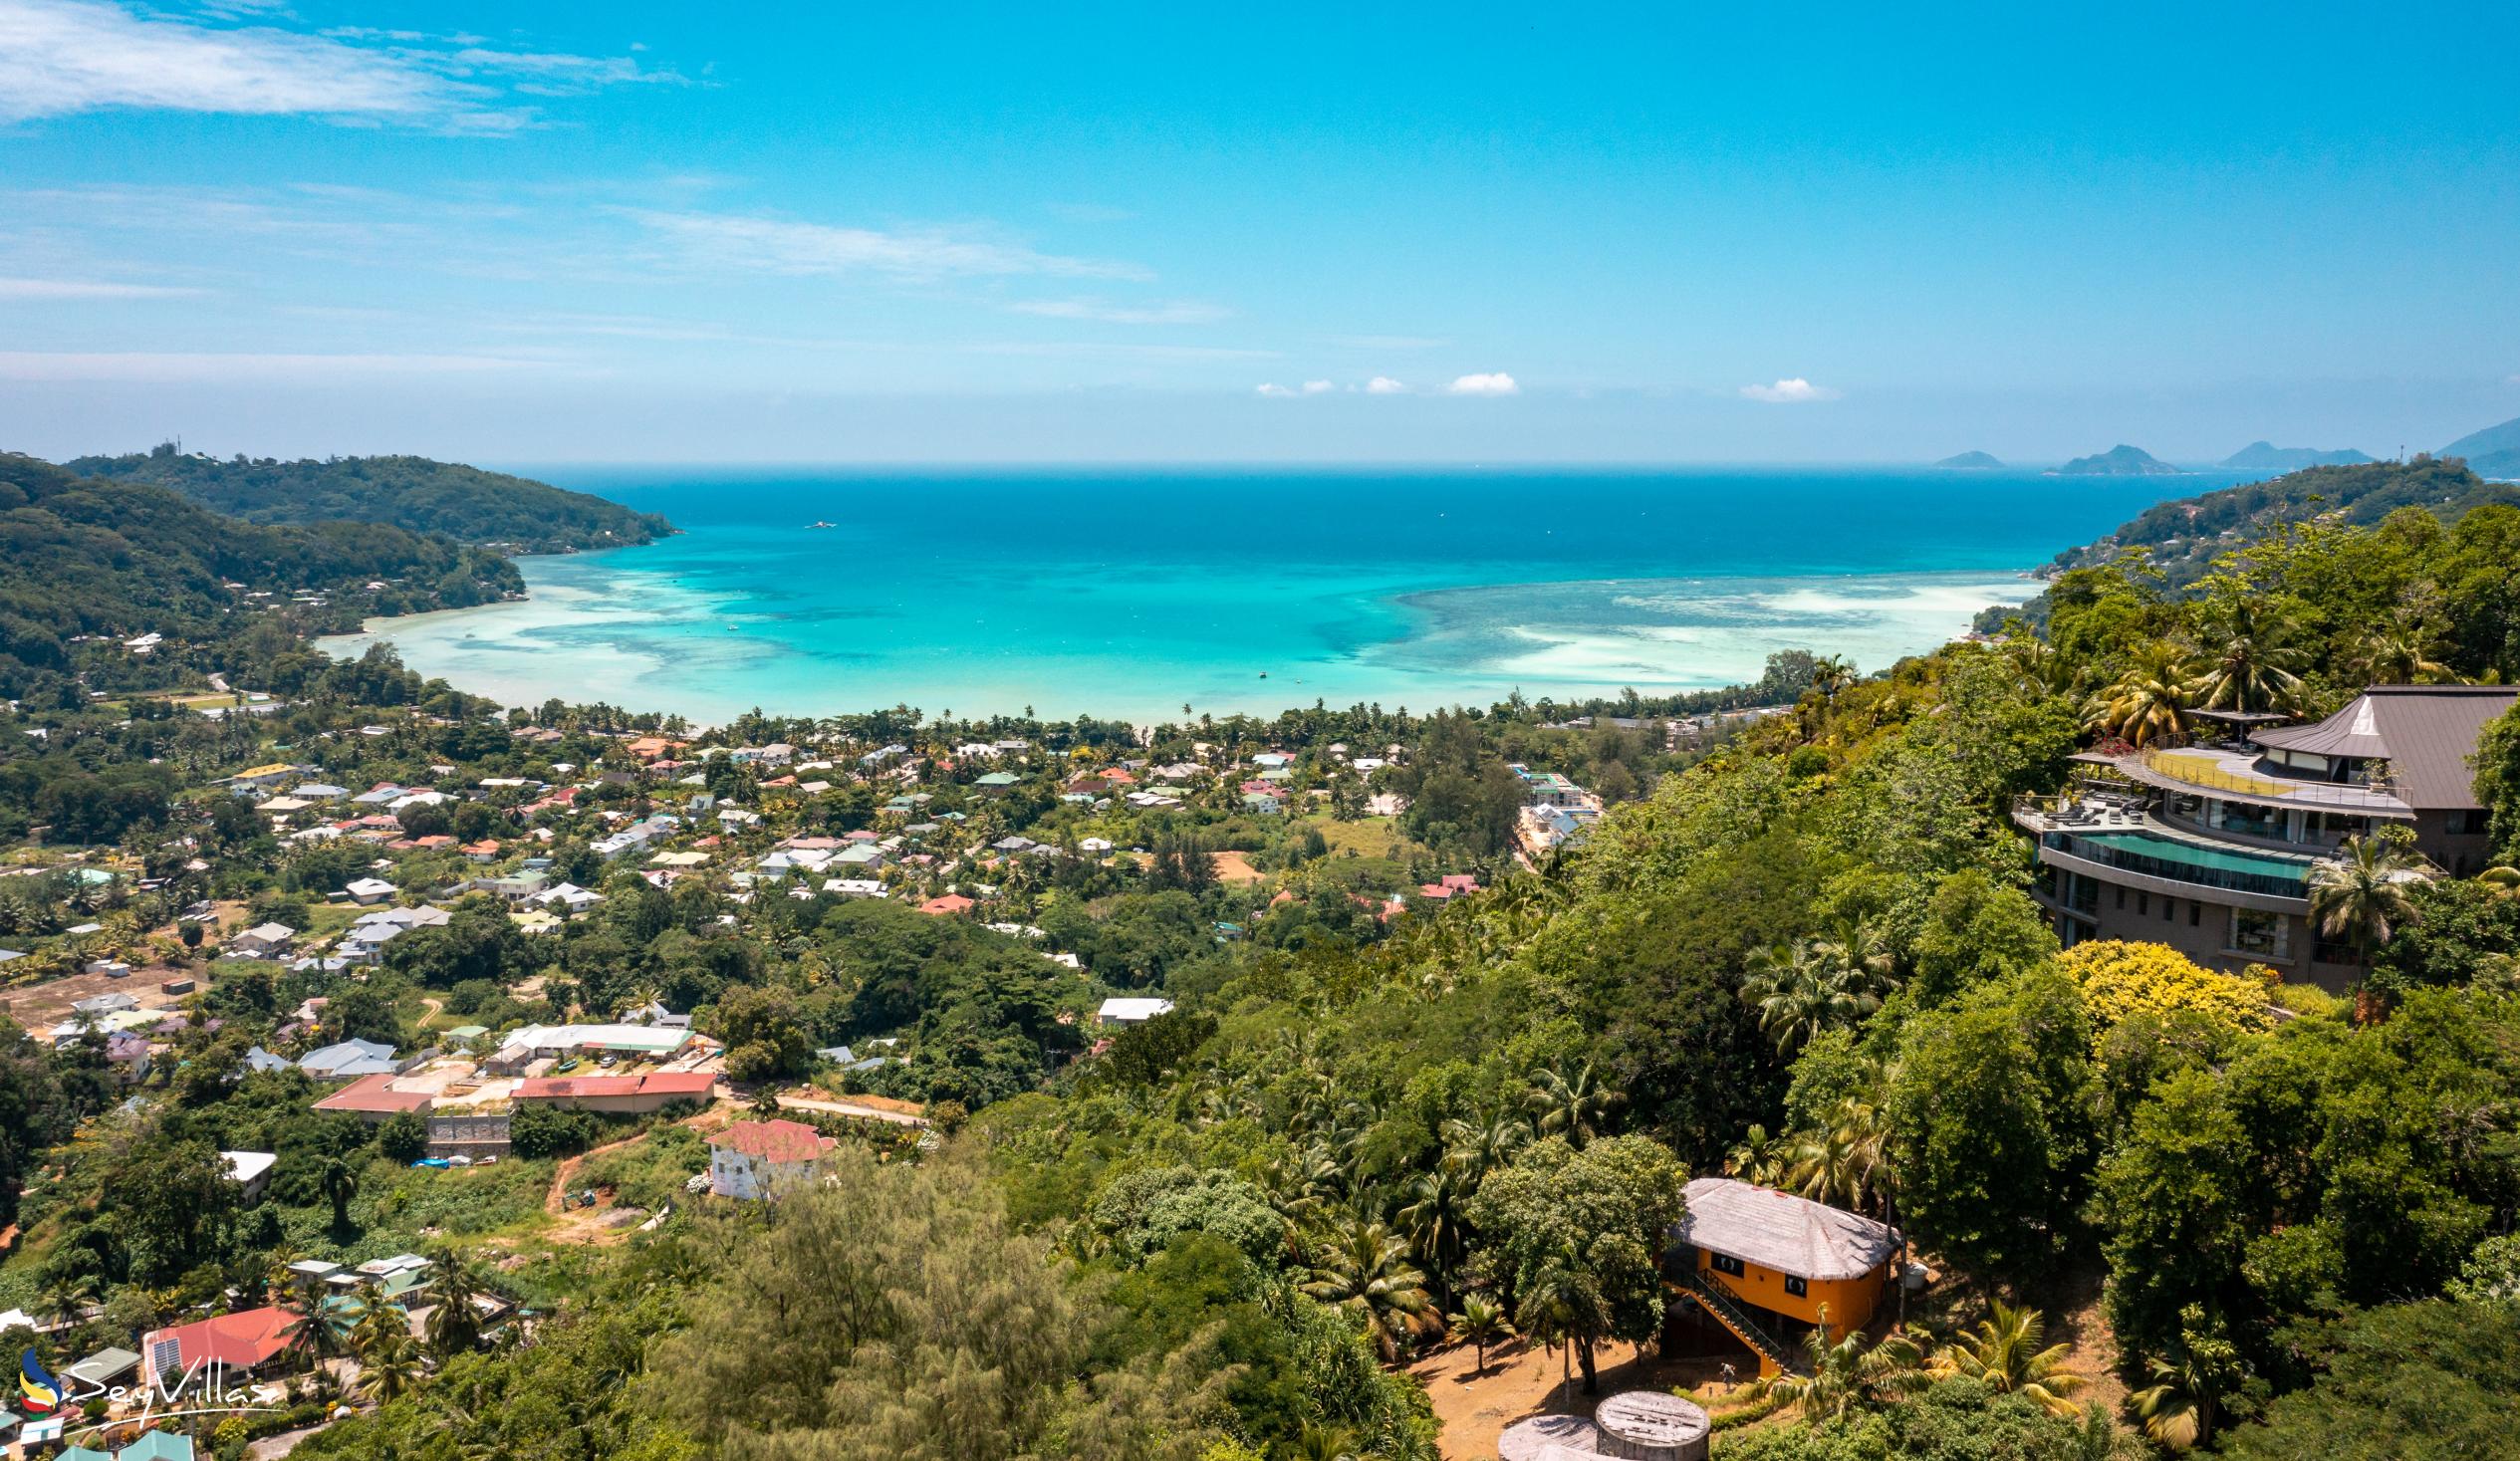 Foto 27: Residence Monte Cristo - Lage - Mahé (Seychellen)